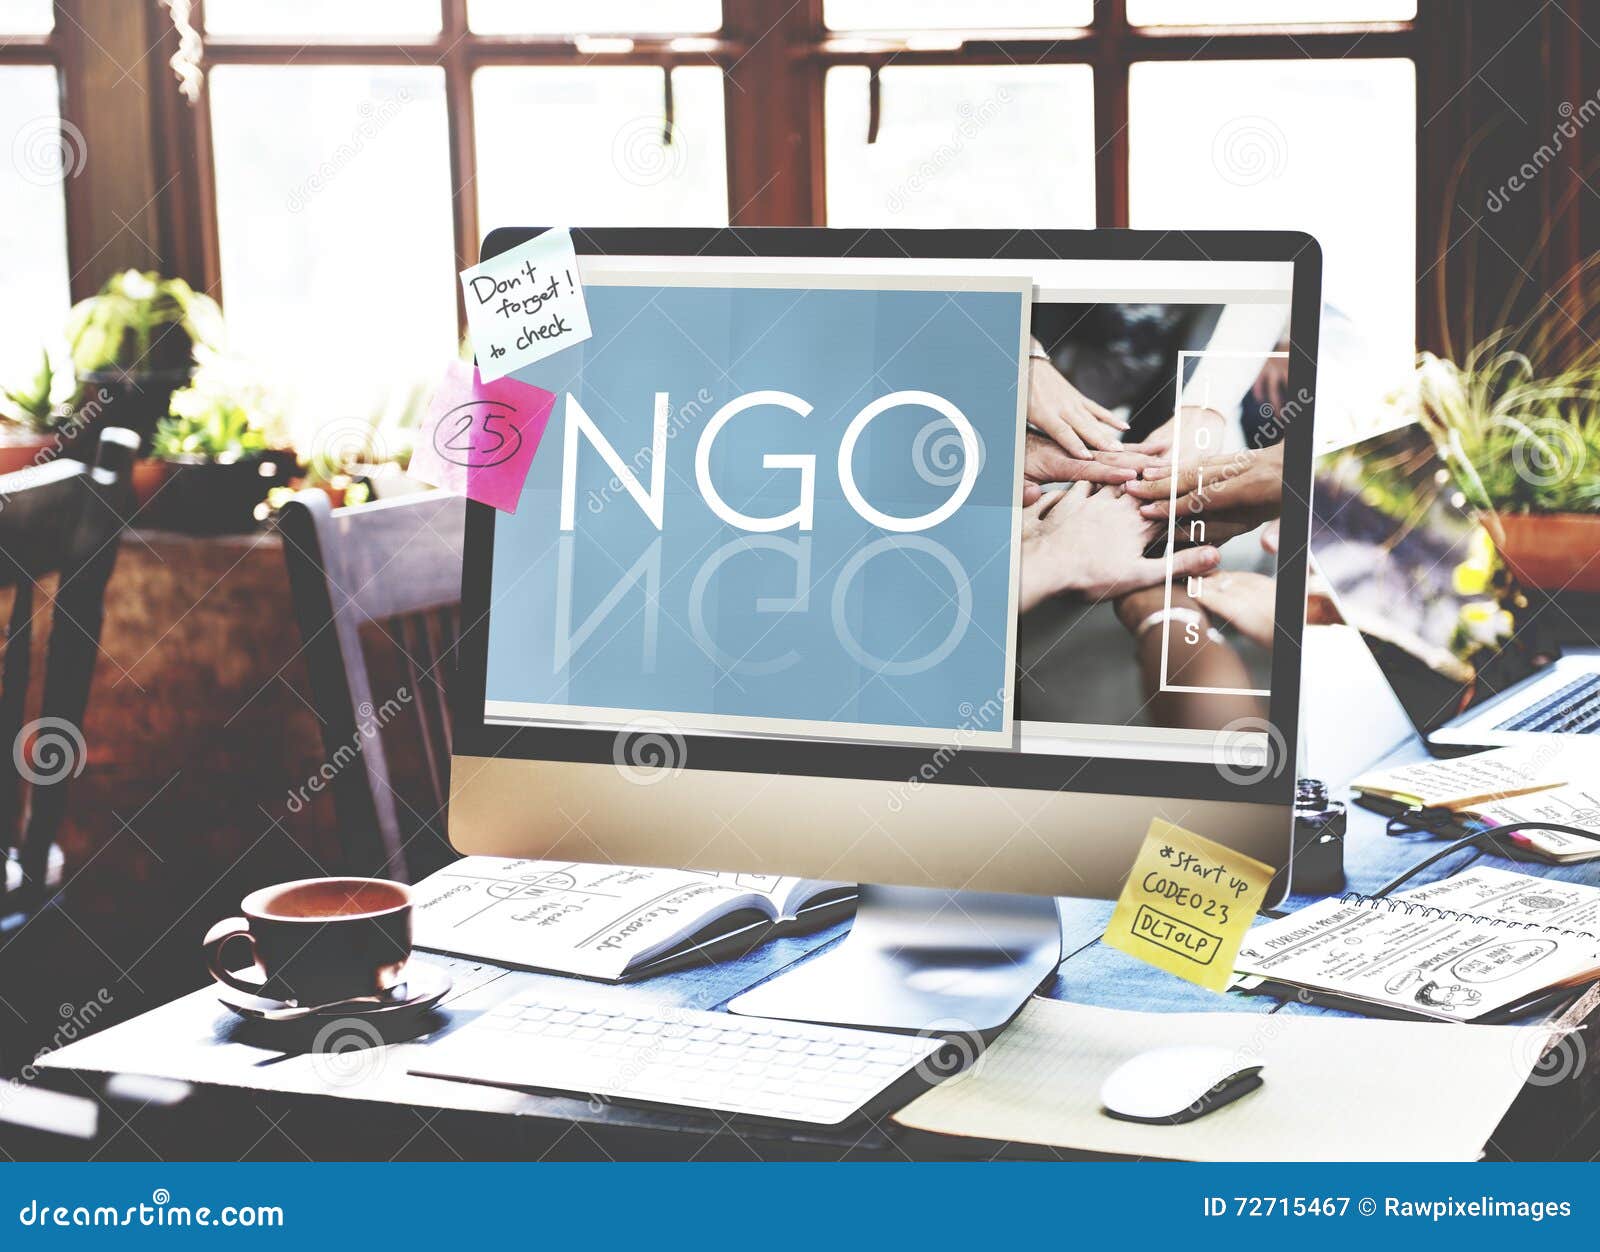 ngo contribution corporate foundation nonprofit concept